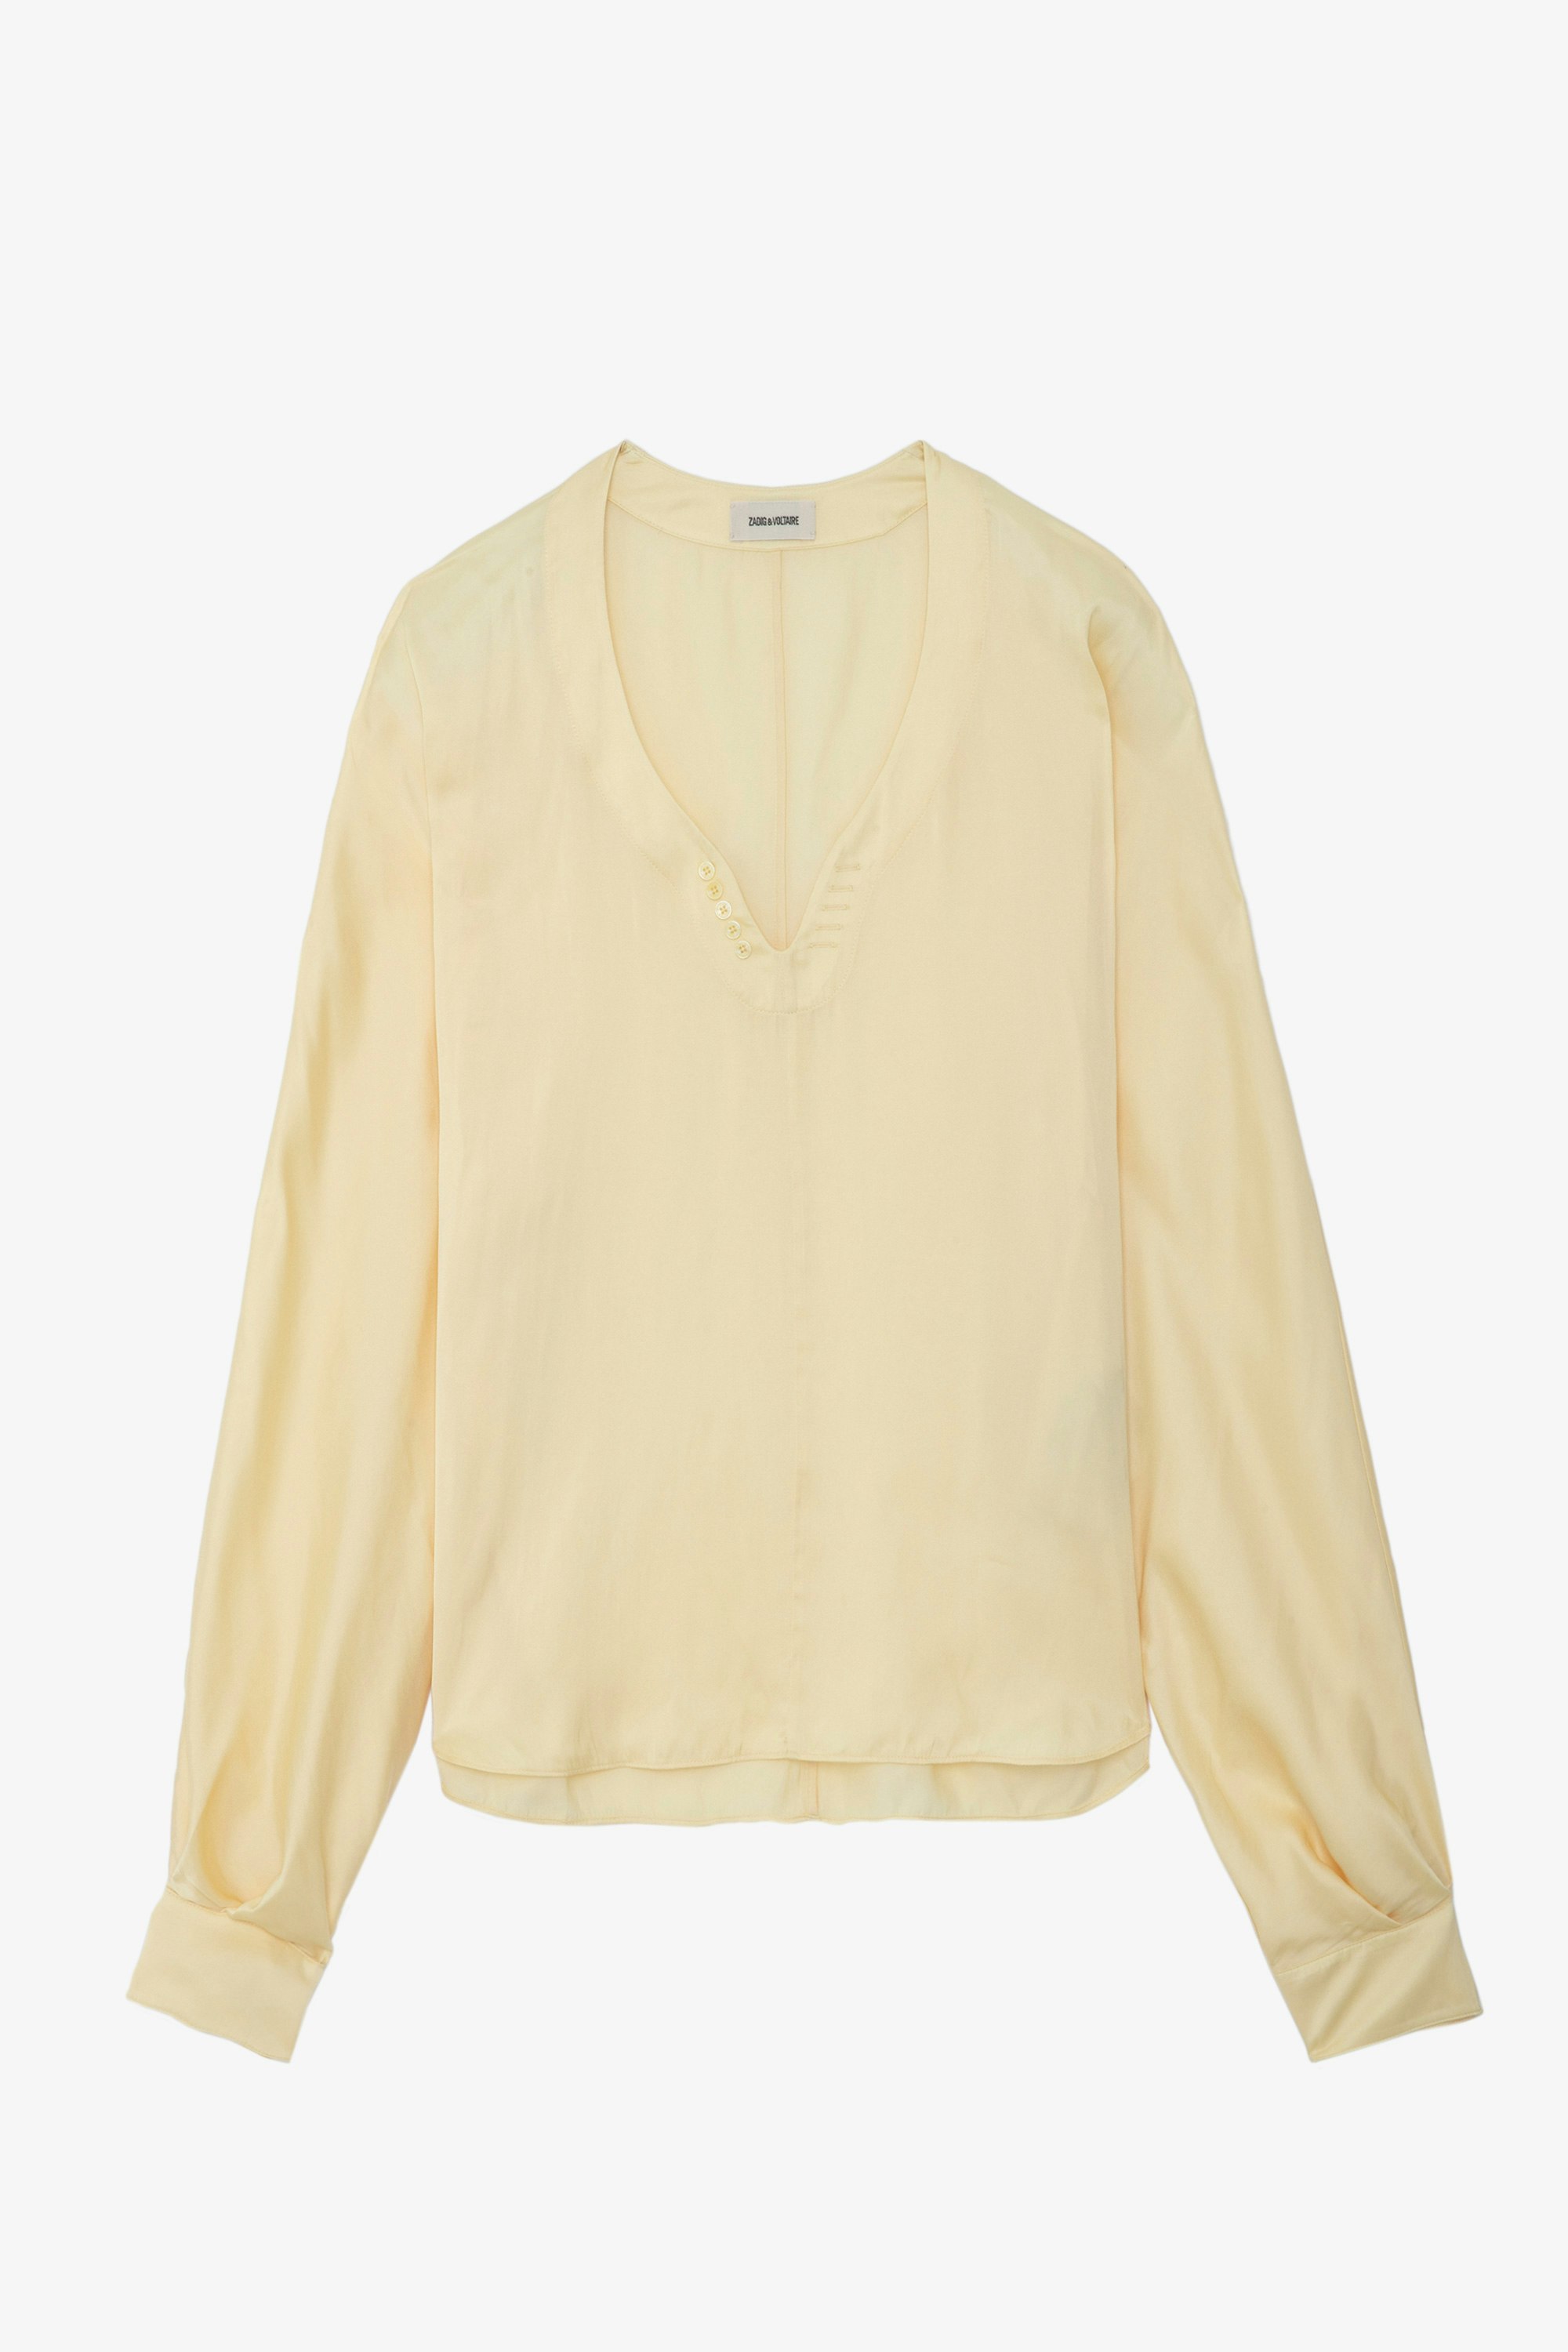 Tonastir Satin Blouse - Light yellow satin Henley blouse with long sleeves.